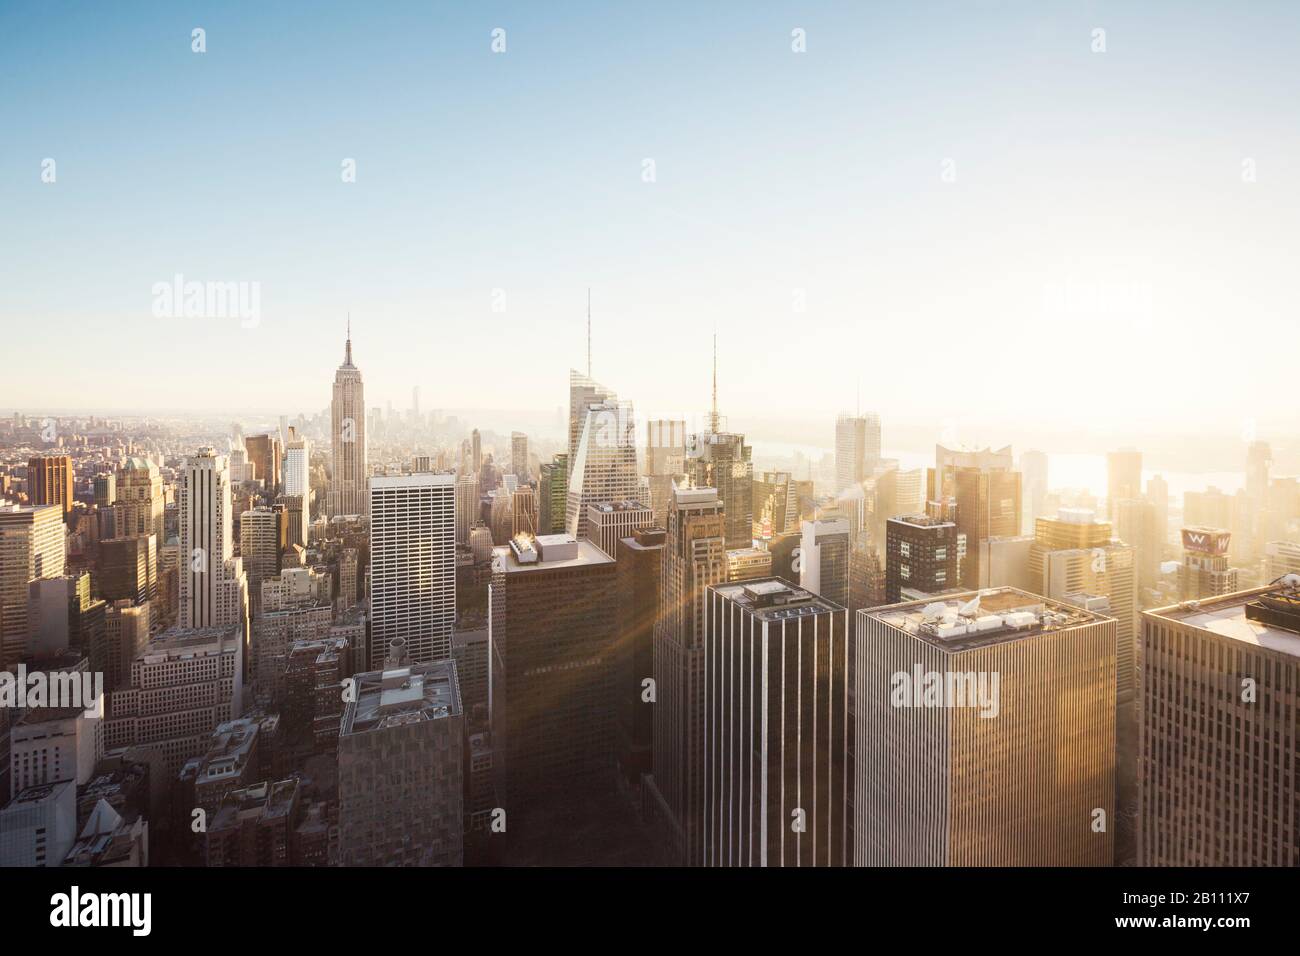 Manhattan skyline at sunset, New York, USA Banque D'Images